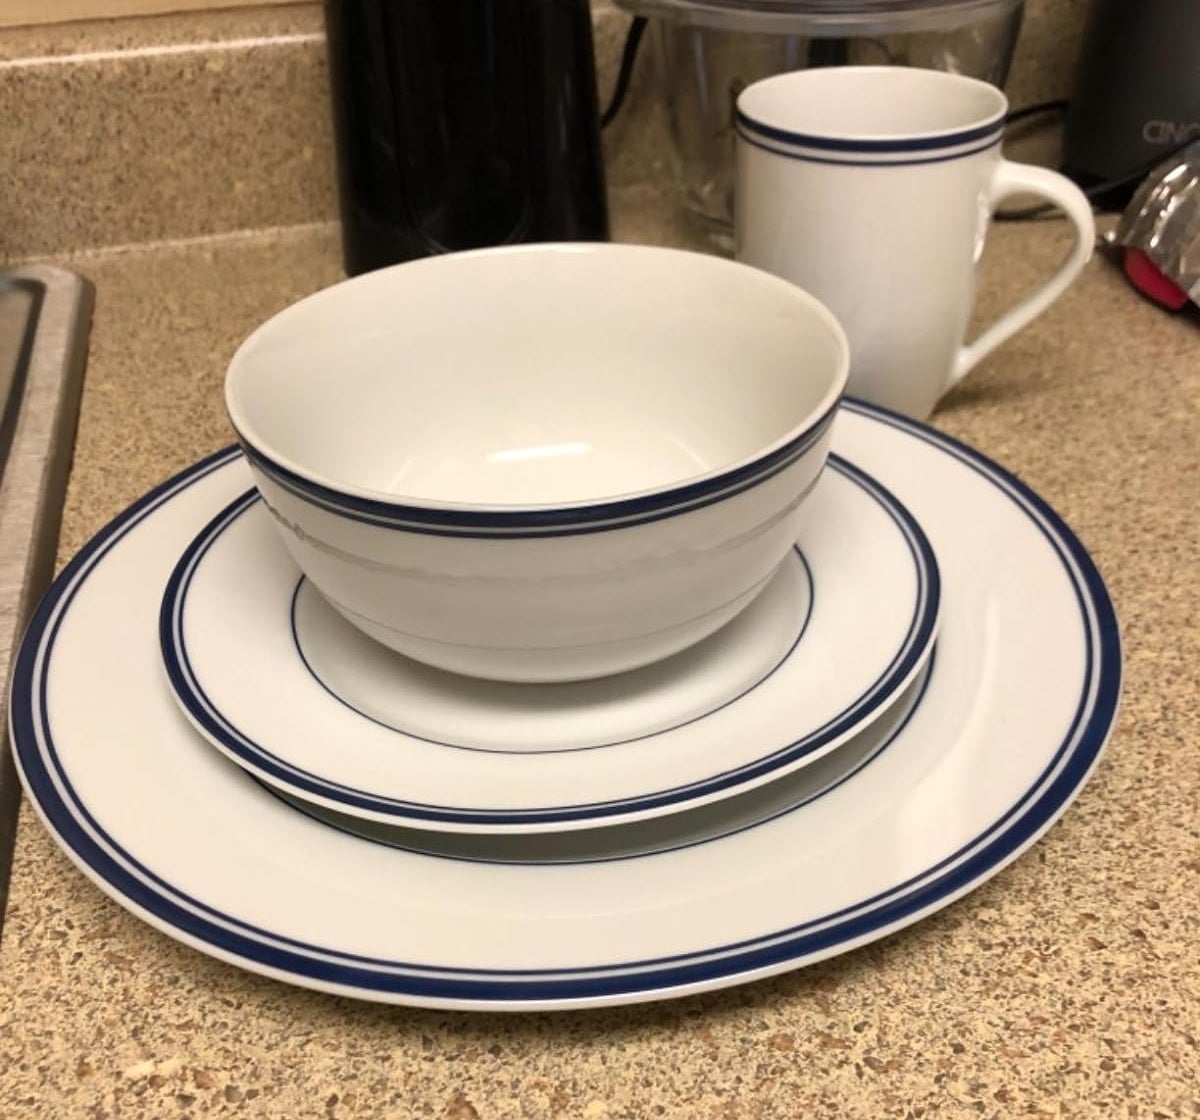 Reviewer image of the plates, bowl and mug